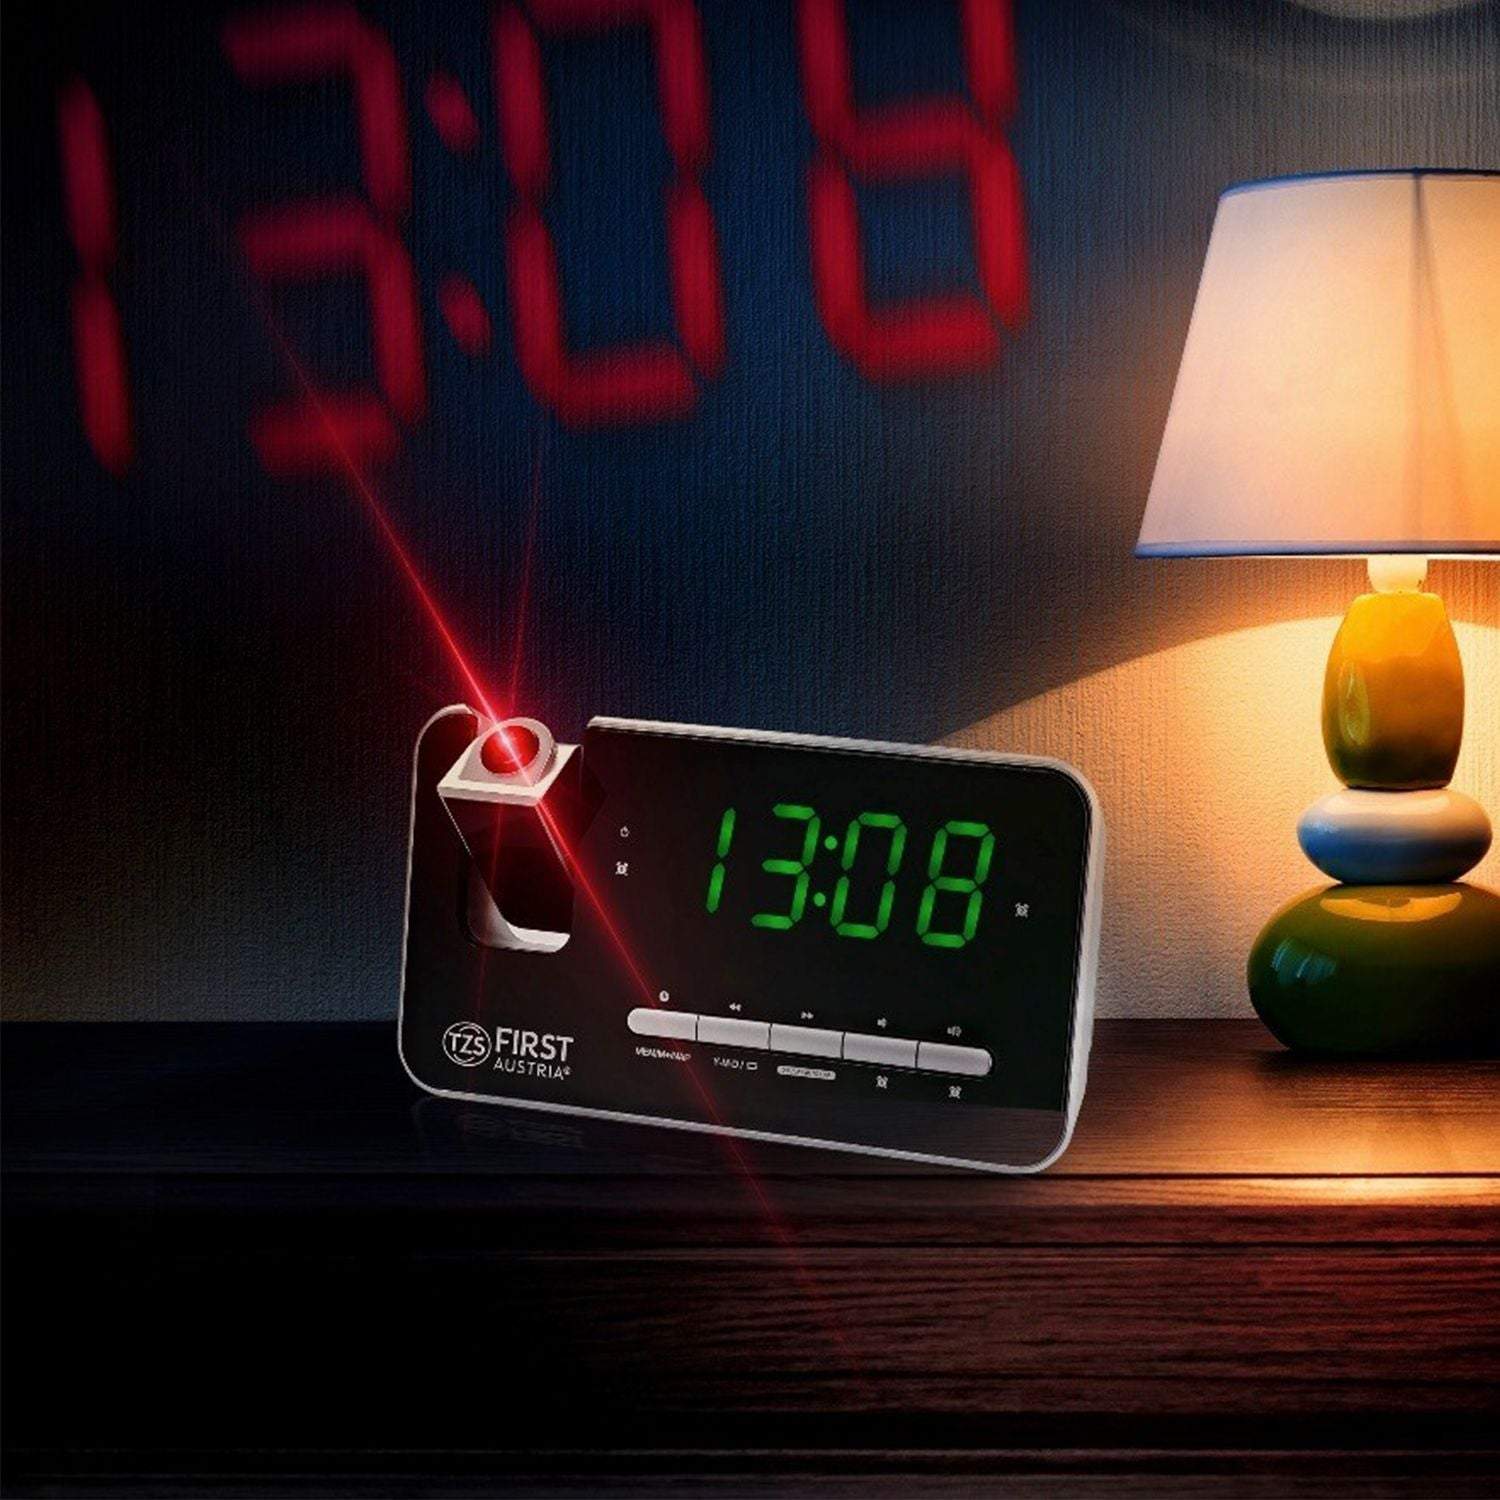 TZS First Austria FM Radio Alarm Clock | Dual Alarm | Calendar-Royal Brands Co-